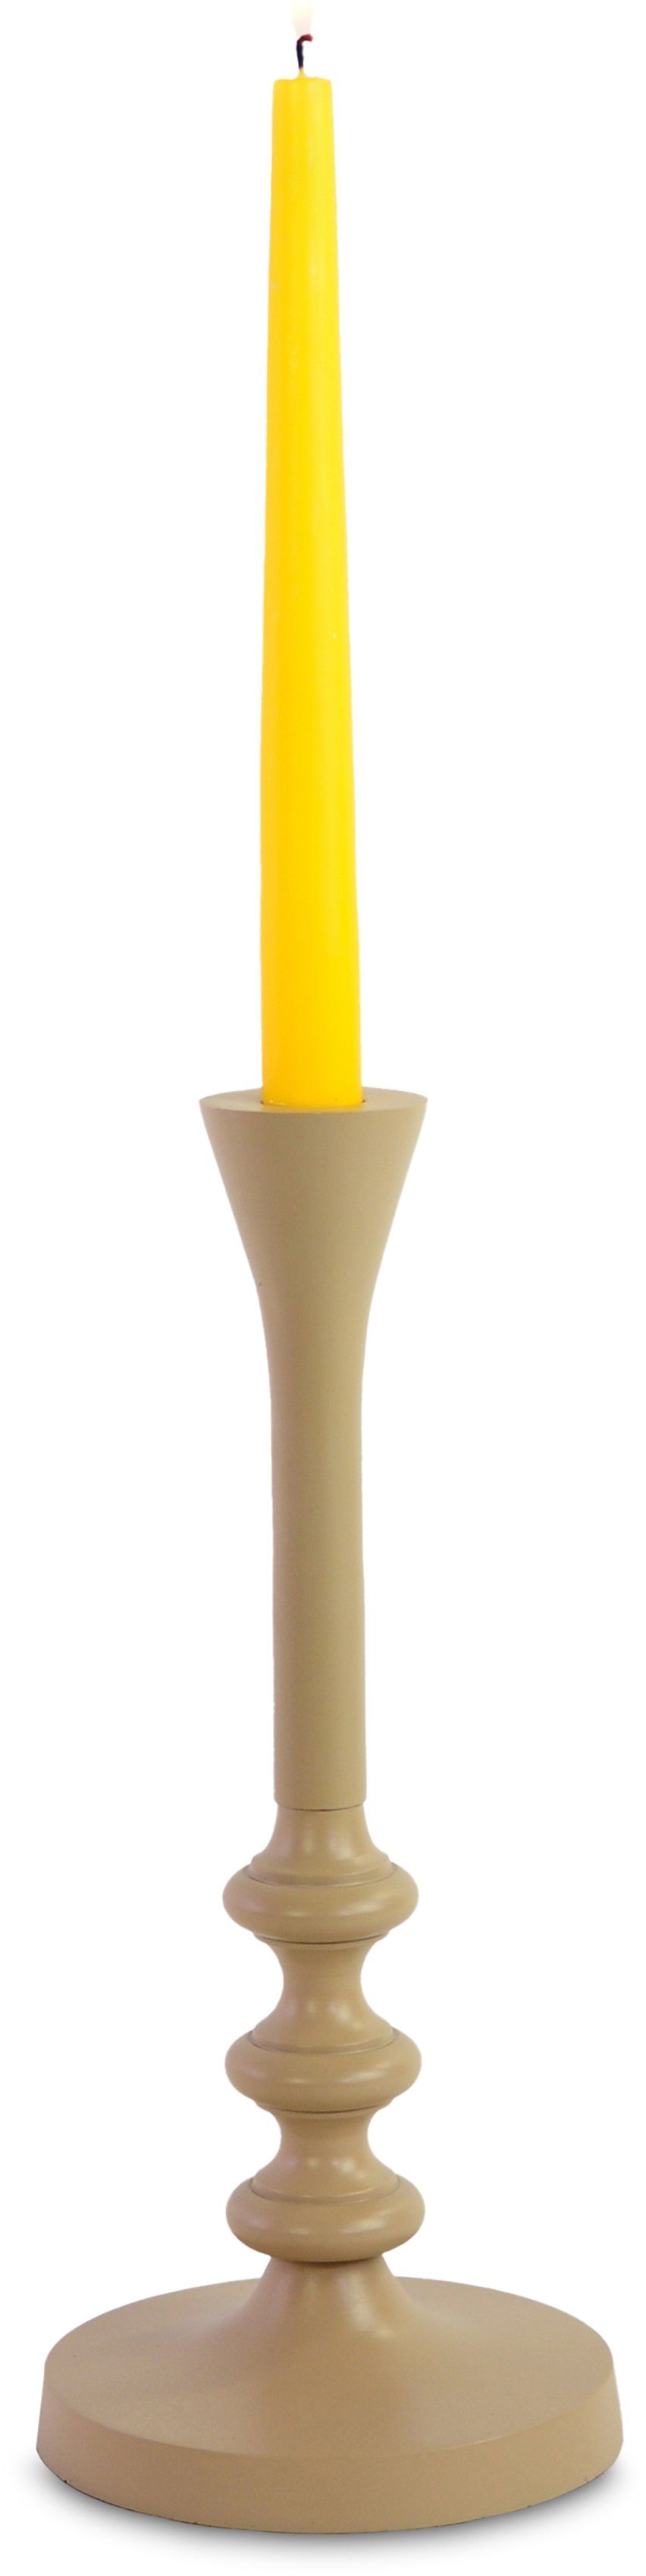 RIFFELMACHER & WEINBERGER Kerzenhalter Weihnachtsdeko, Kerzenleuchter, Kerzenständer, aus Aluminium, grau matt, Höhe 30 cm